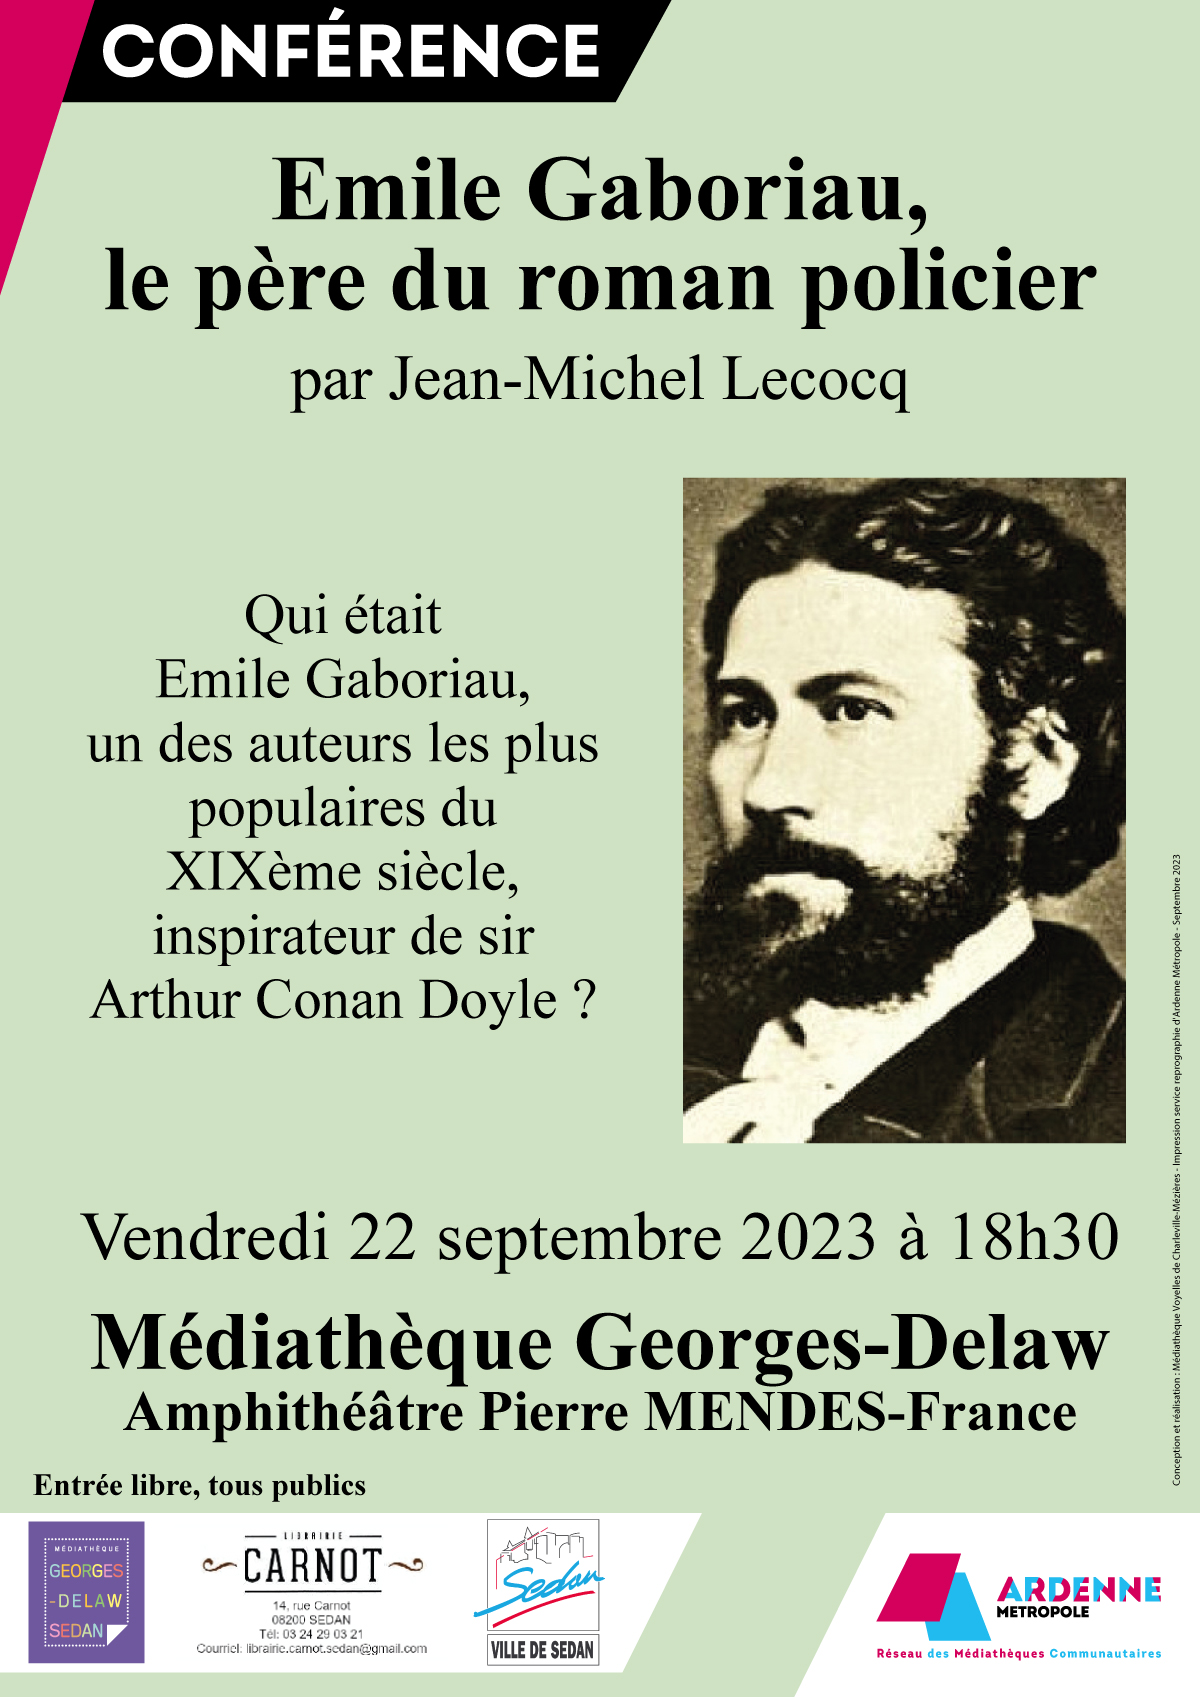 Conference Emile Gaboriau Sedan